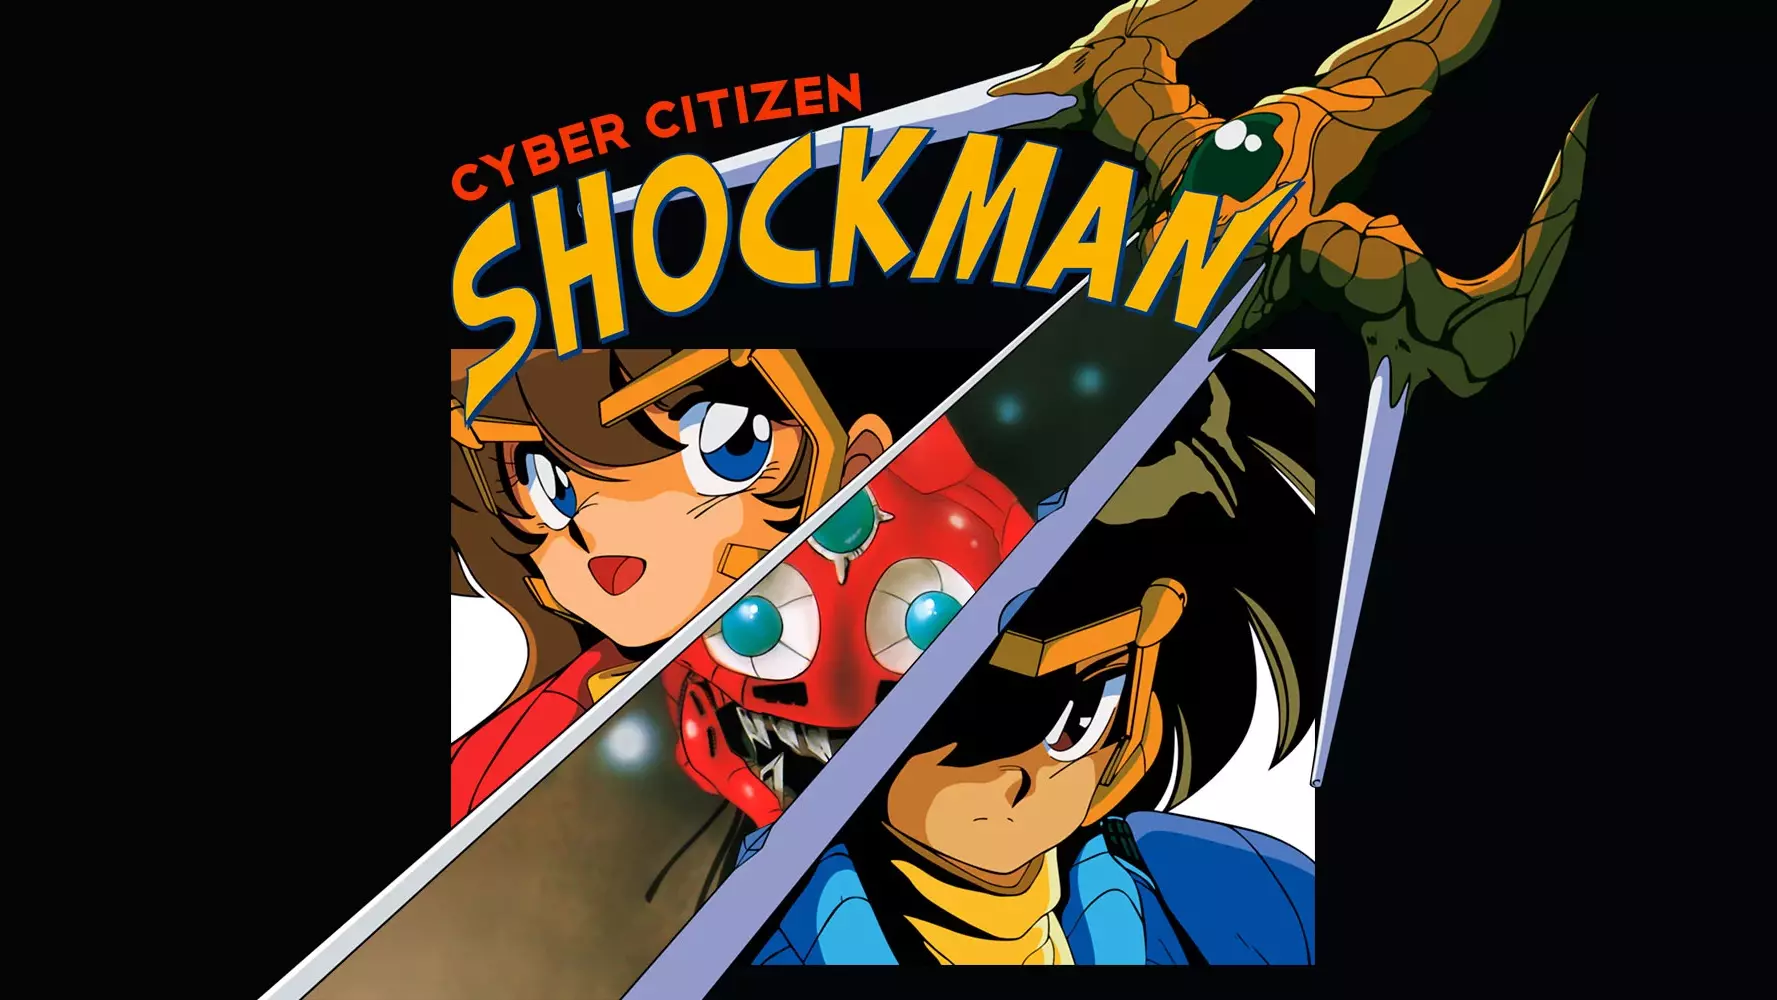 Cyber Citizen Shockman arriba finalment a Occident